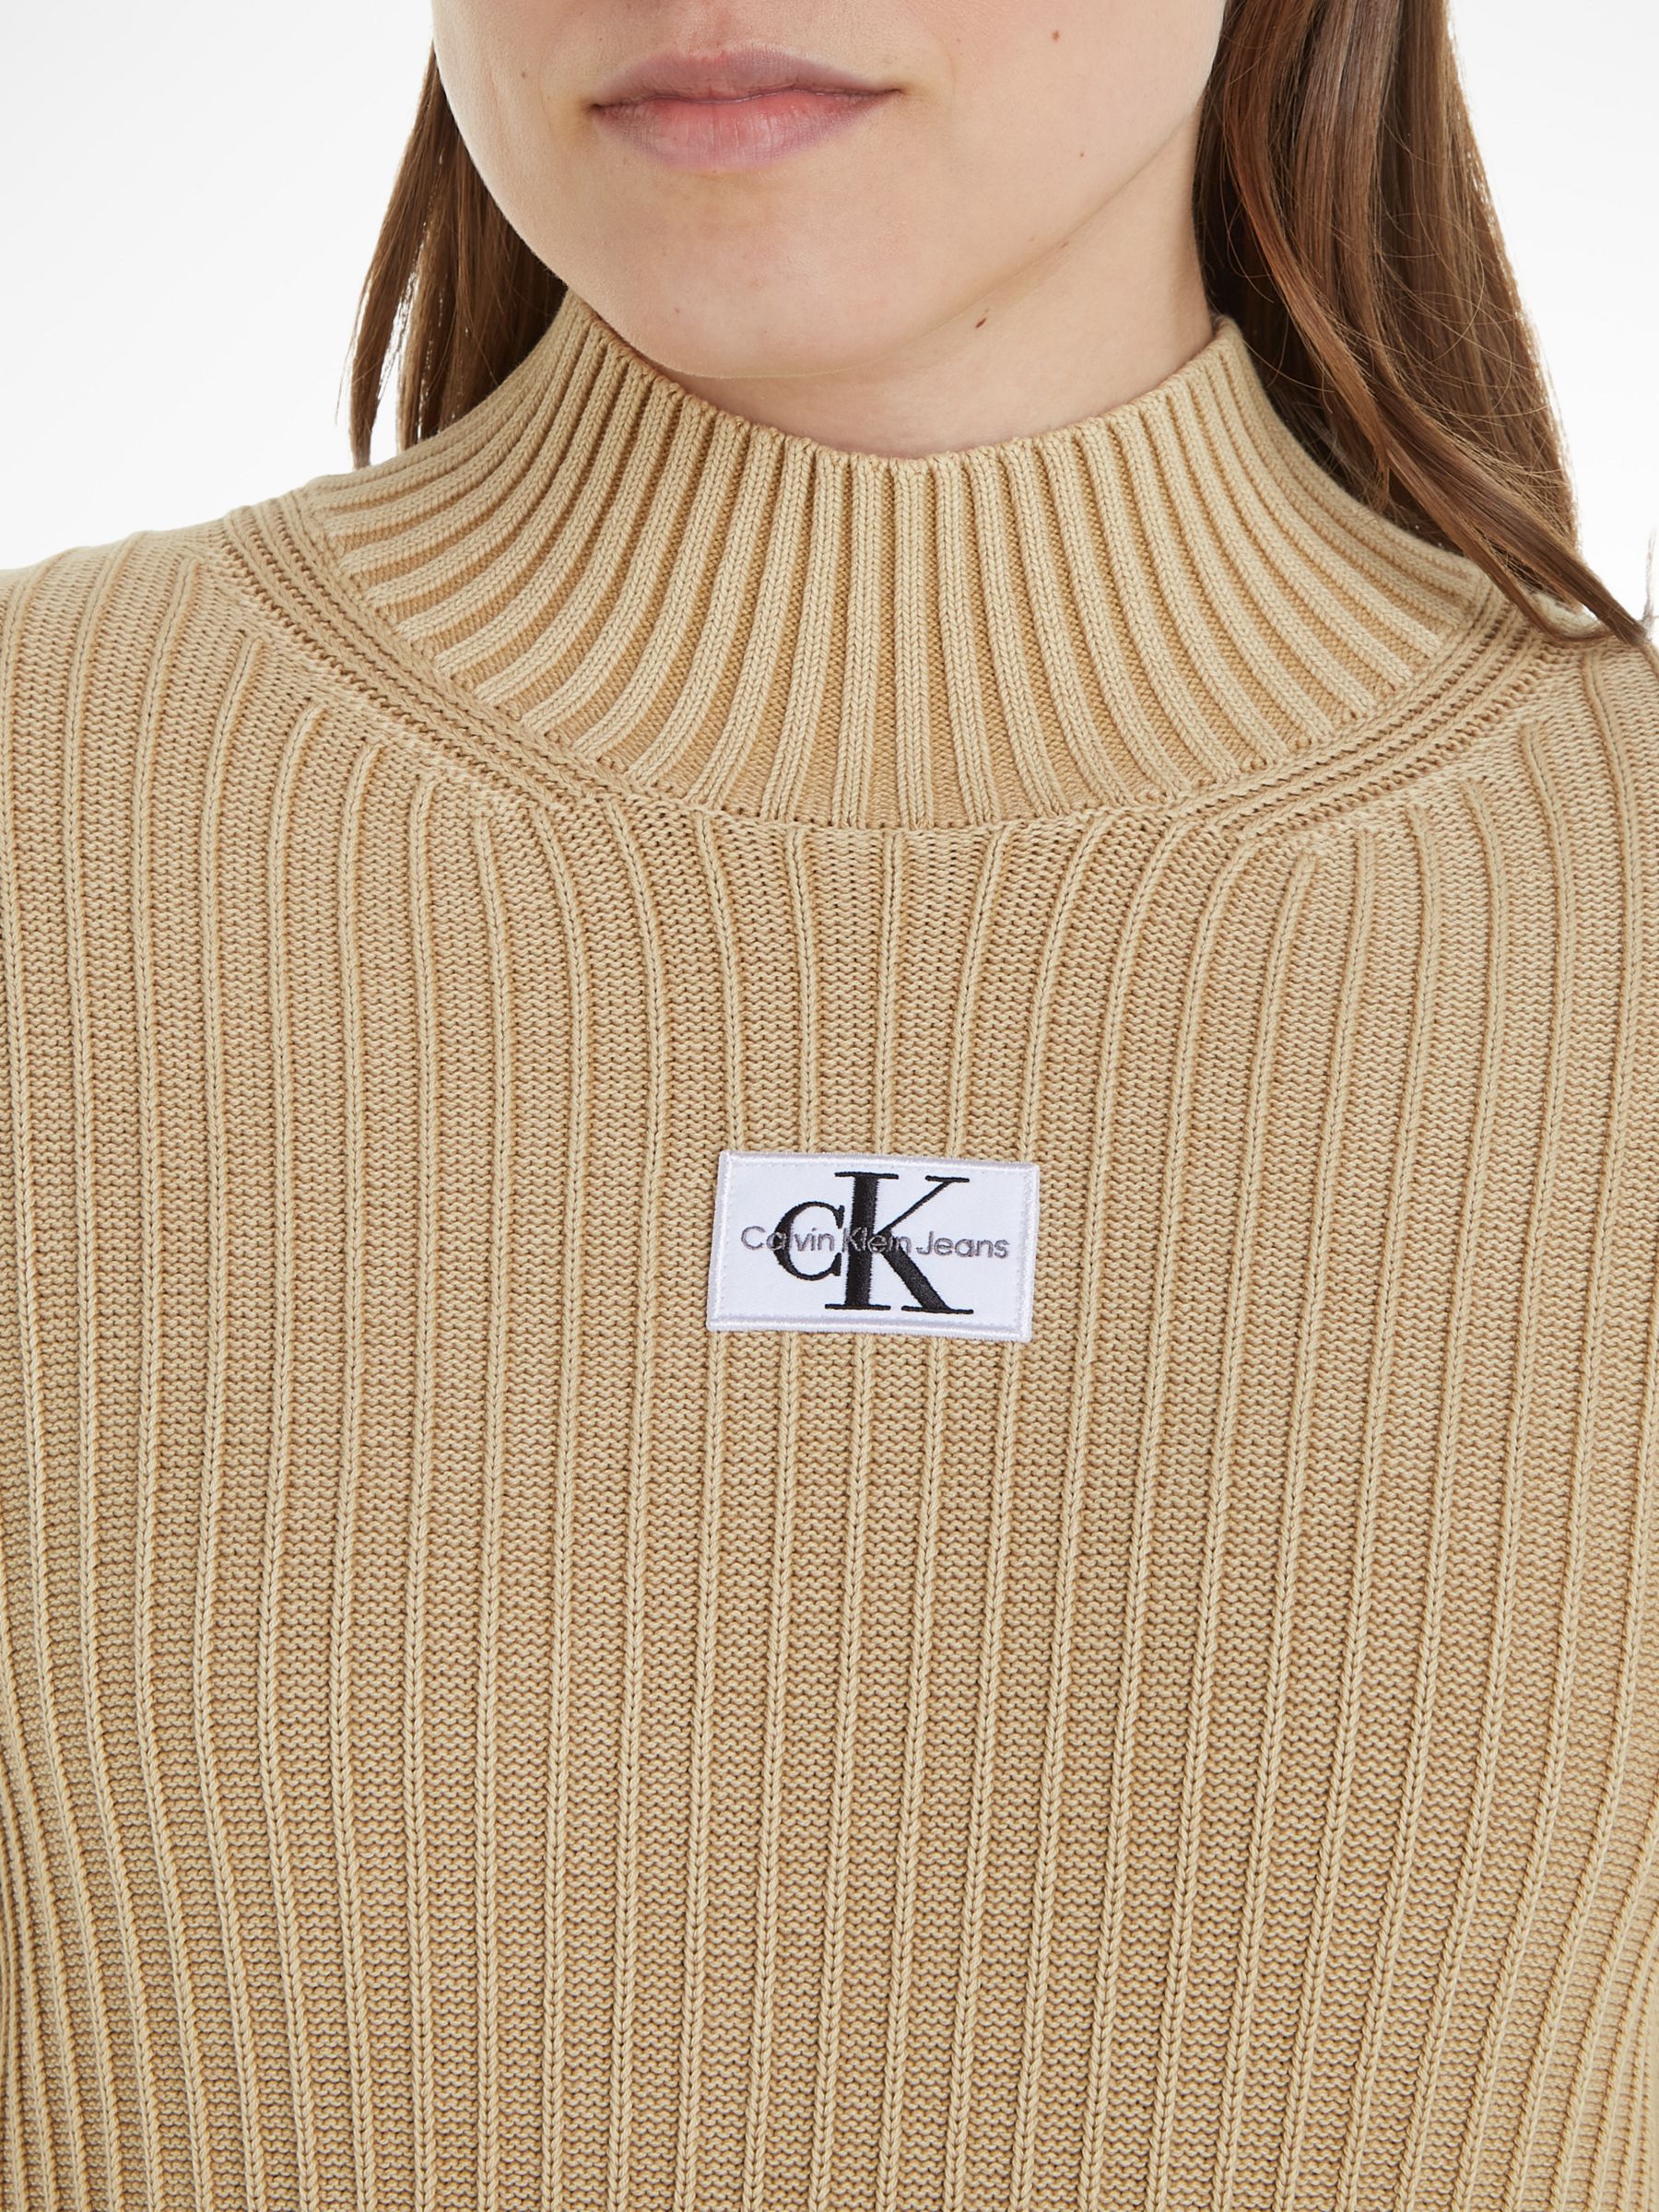 Calvin Klein Jeans Woven Label Jumper Dress, Brown, M